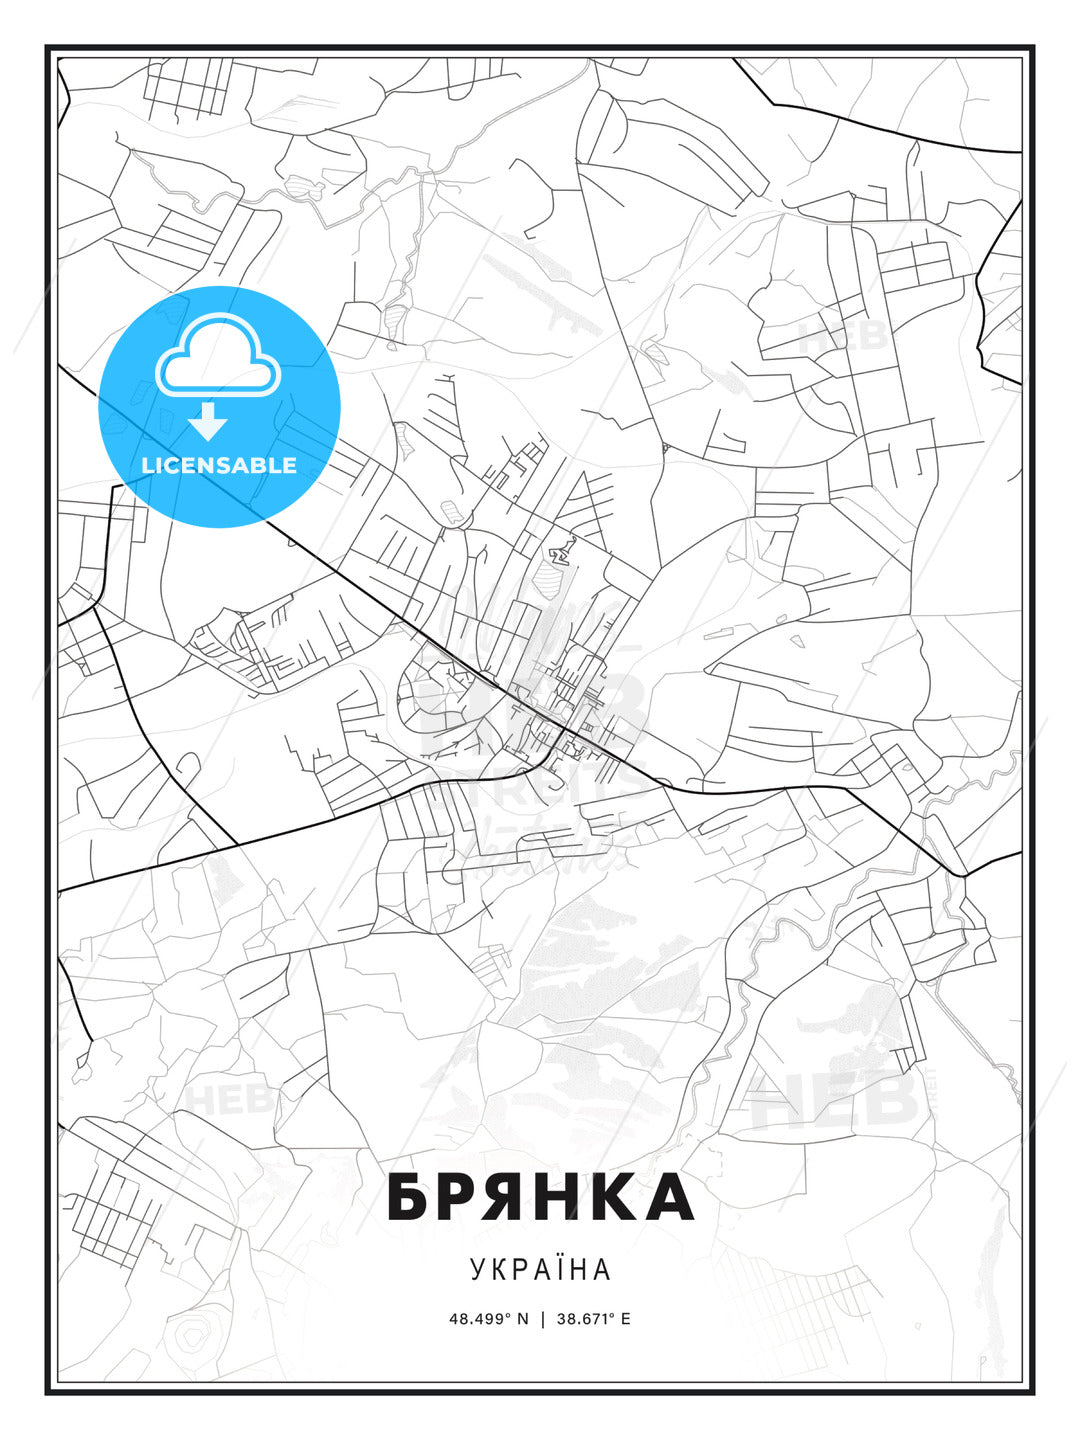 БРЯНКА / Brianka, Ukraine, Modern Print Template in Various Formats - HEBSTREITS Sketches